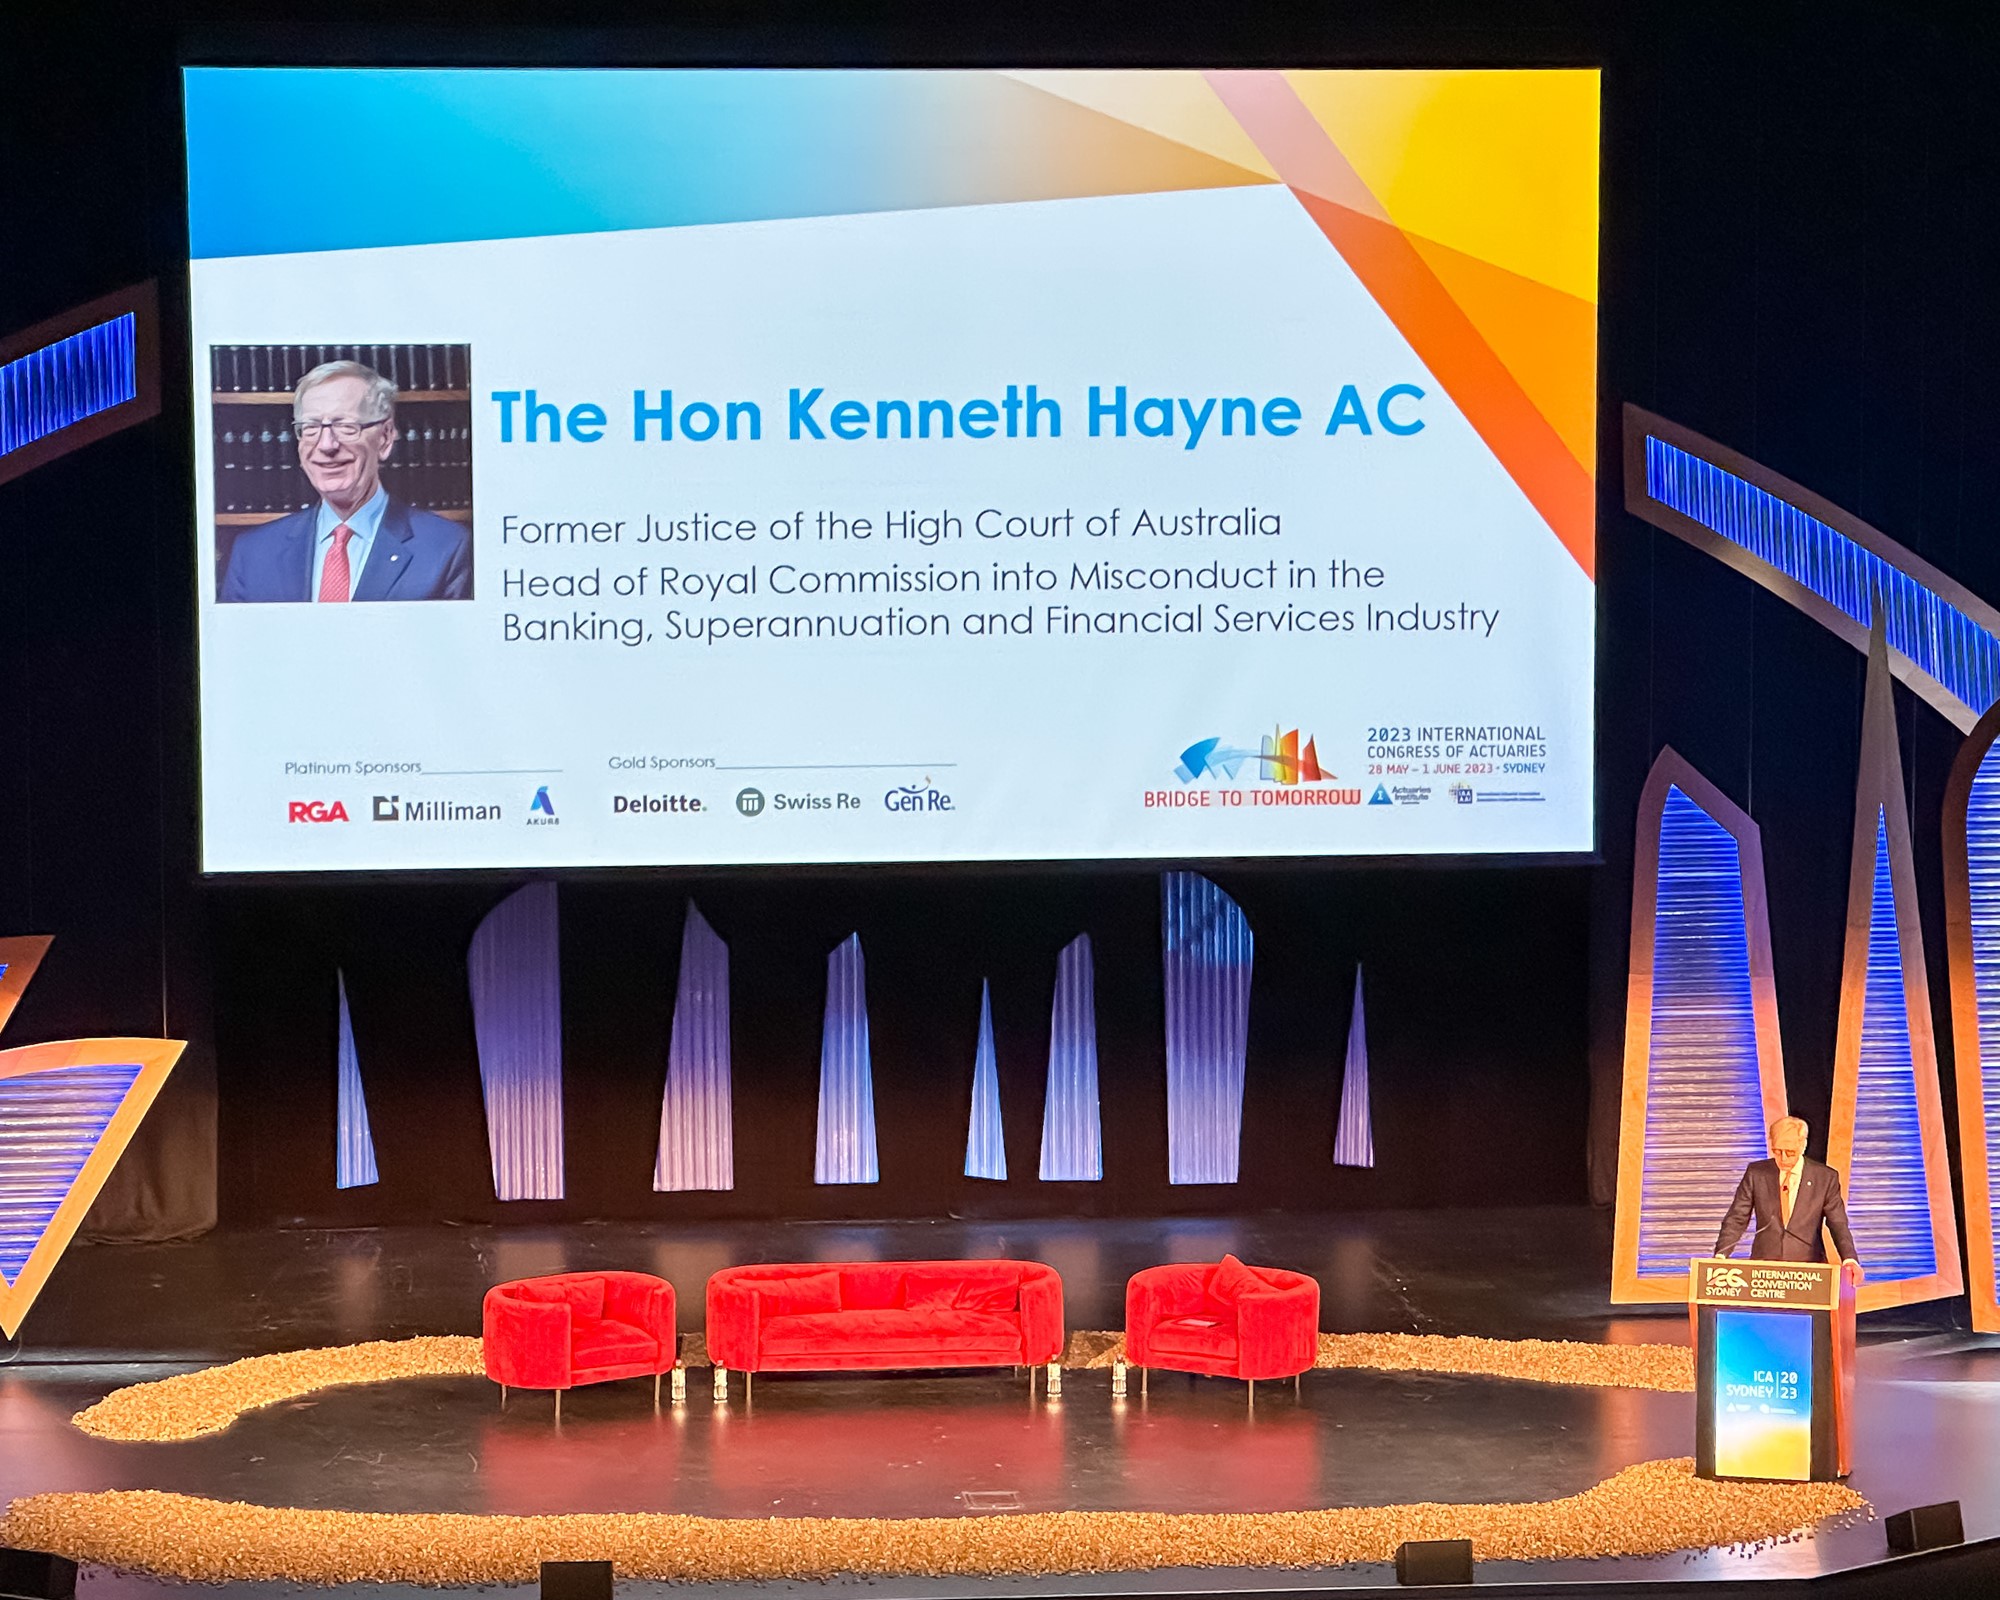 Kenneth Hayne speaks at the International Congress of Actuaries